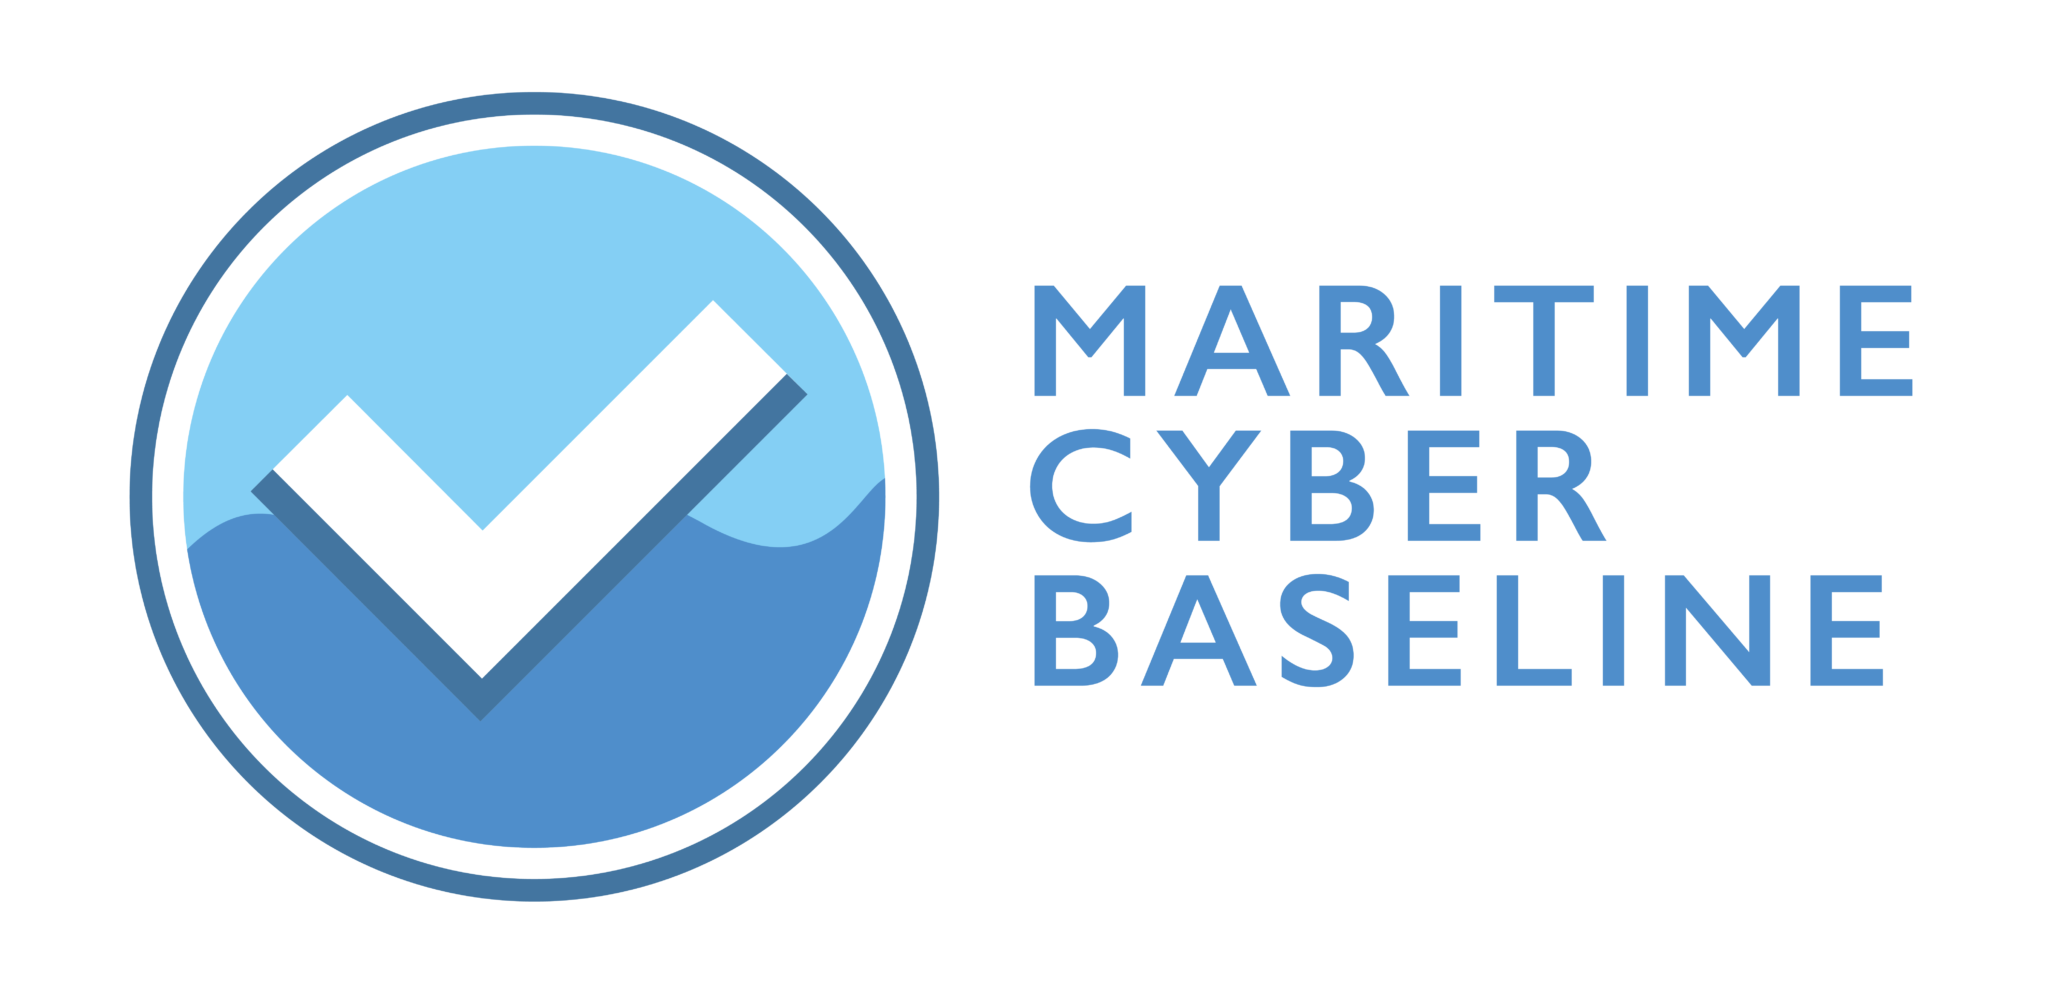 maritime cyber baseline logo